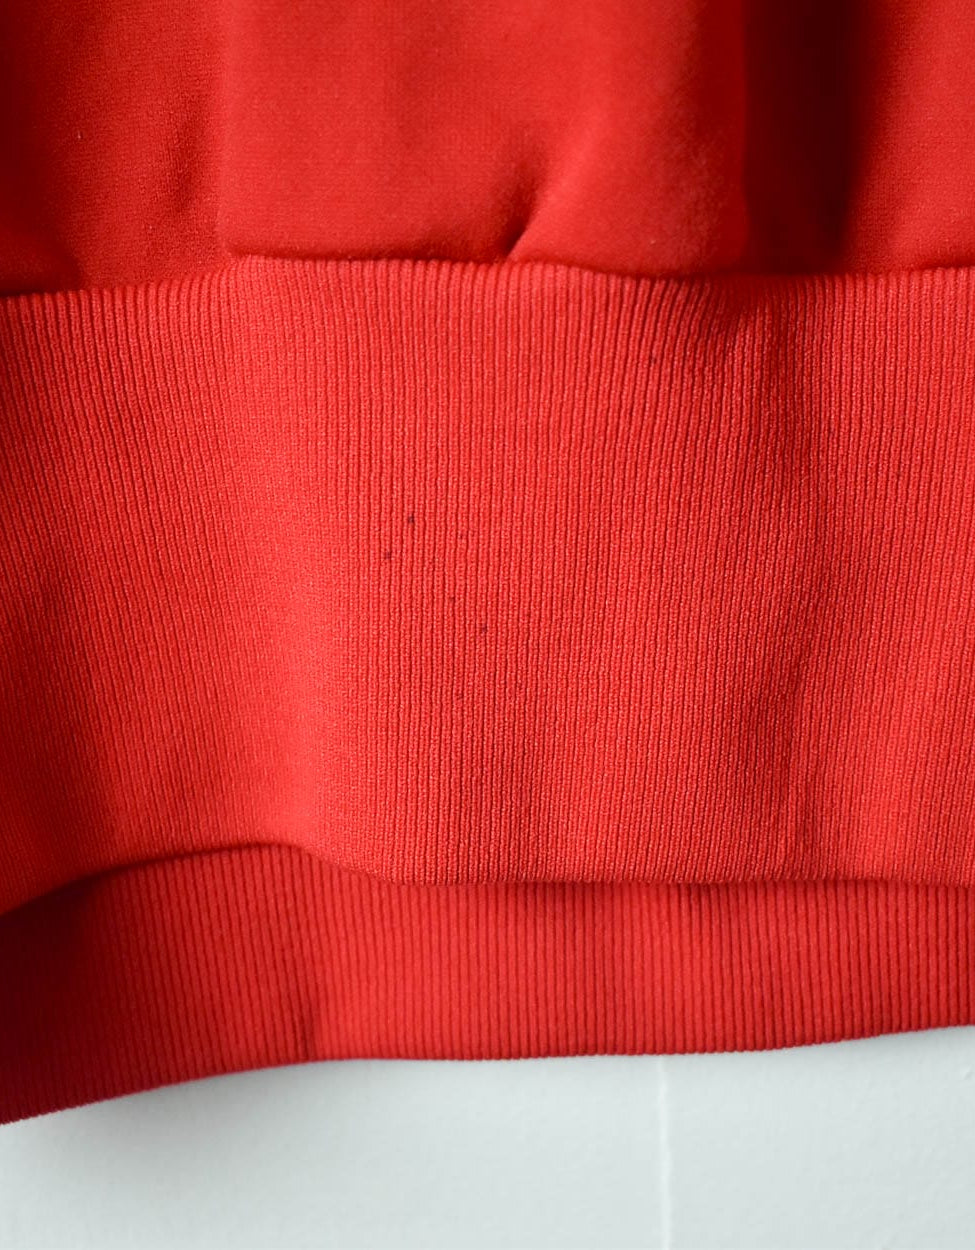 Red Adidas 80s Sweatshirt - X-Small